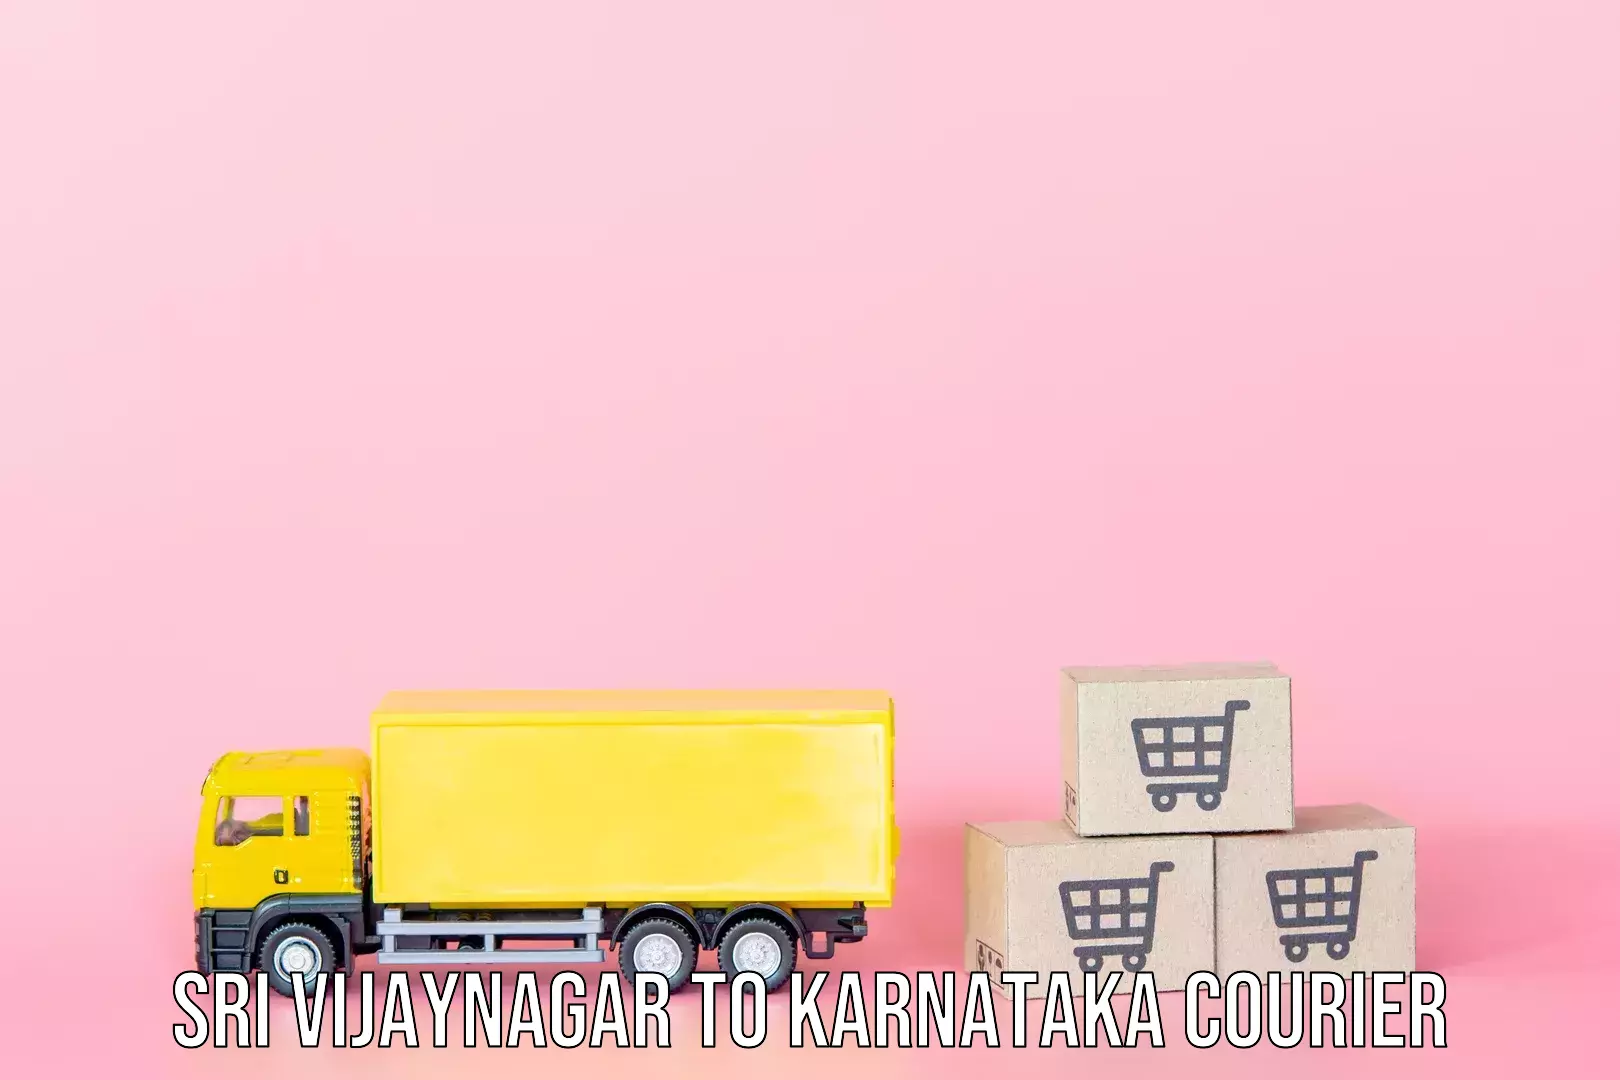 Luggage delivery app Sri Vijaynagar to Karnataka